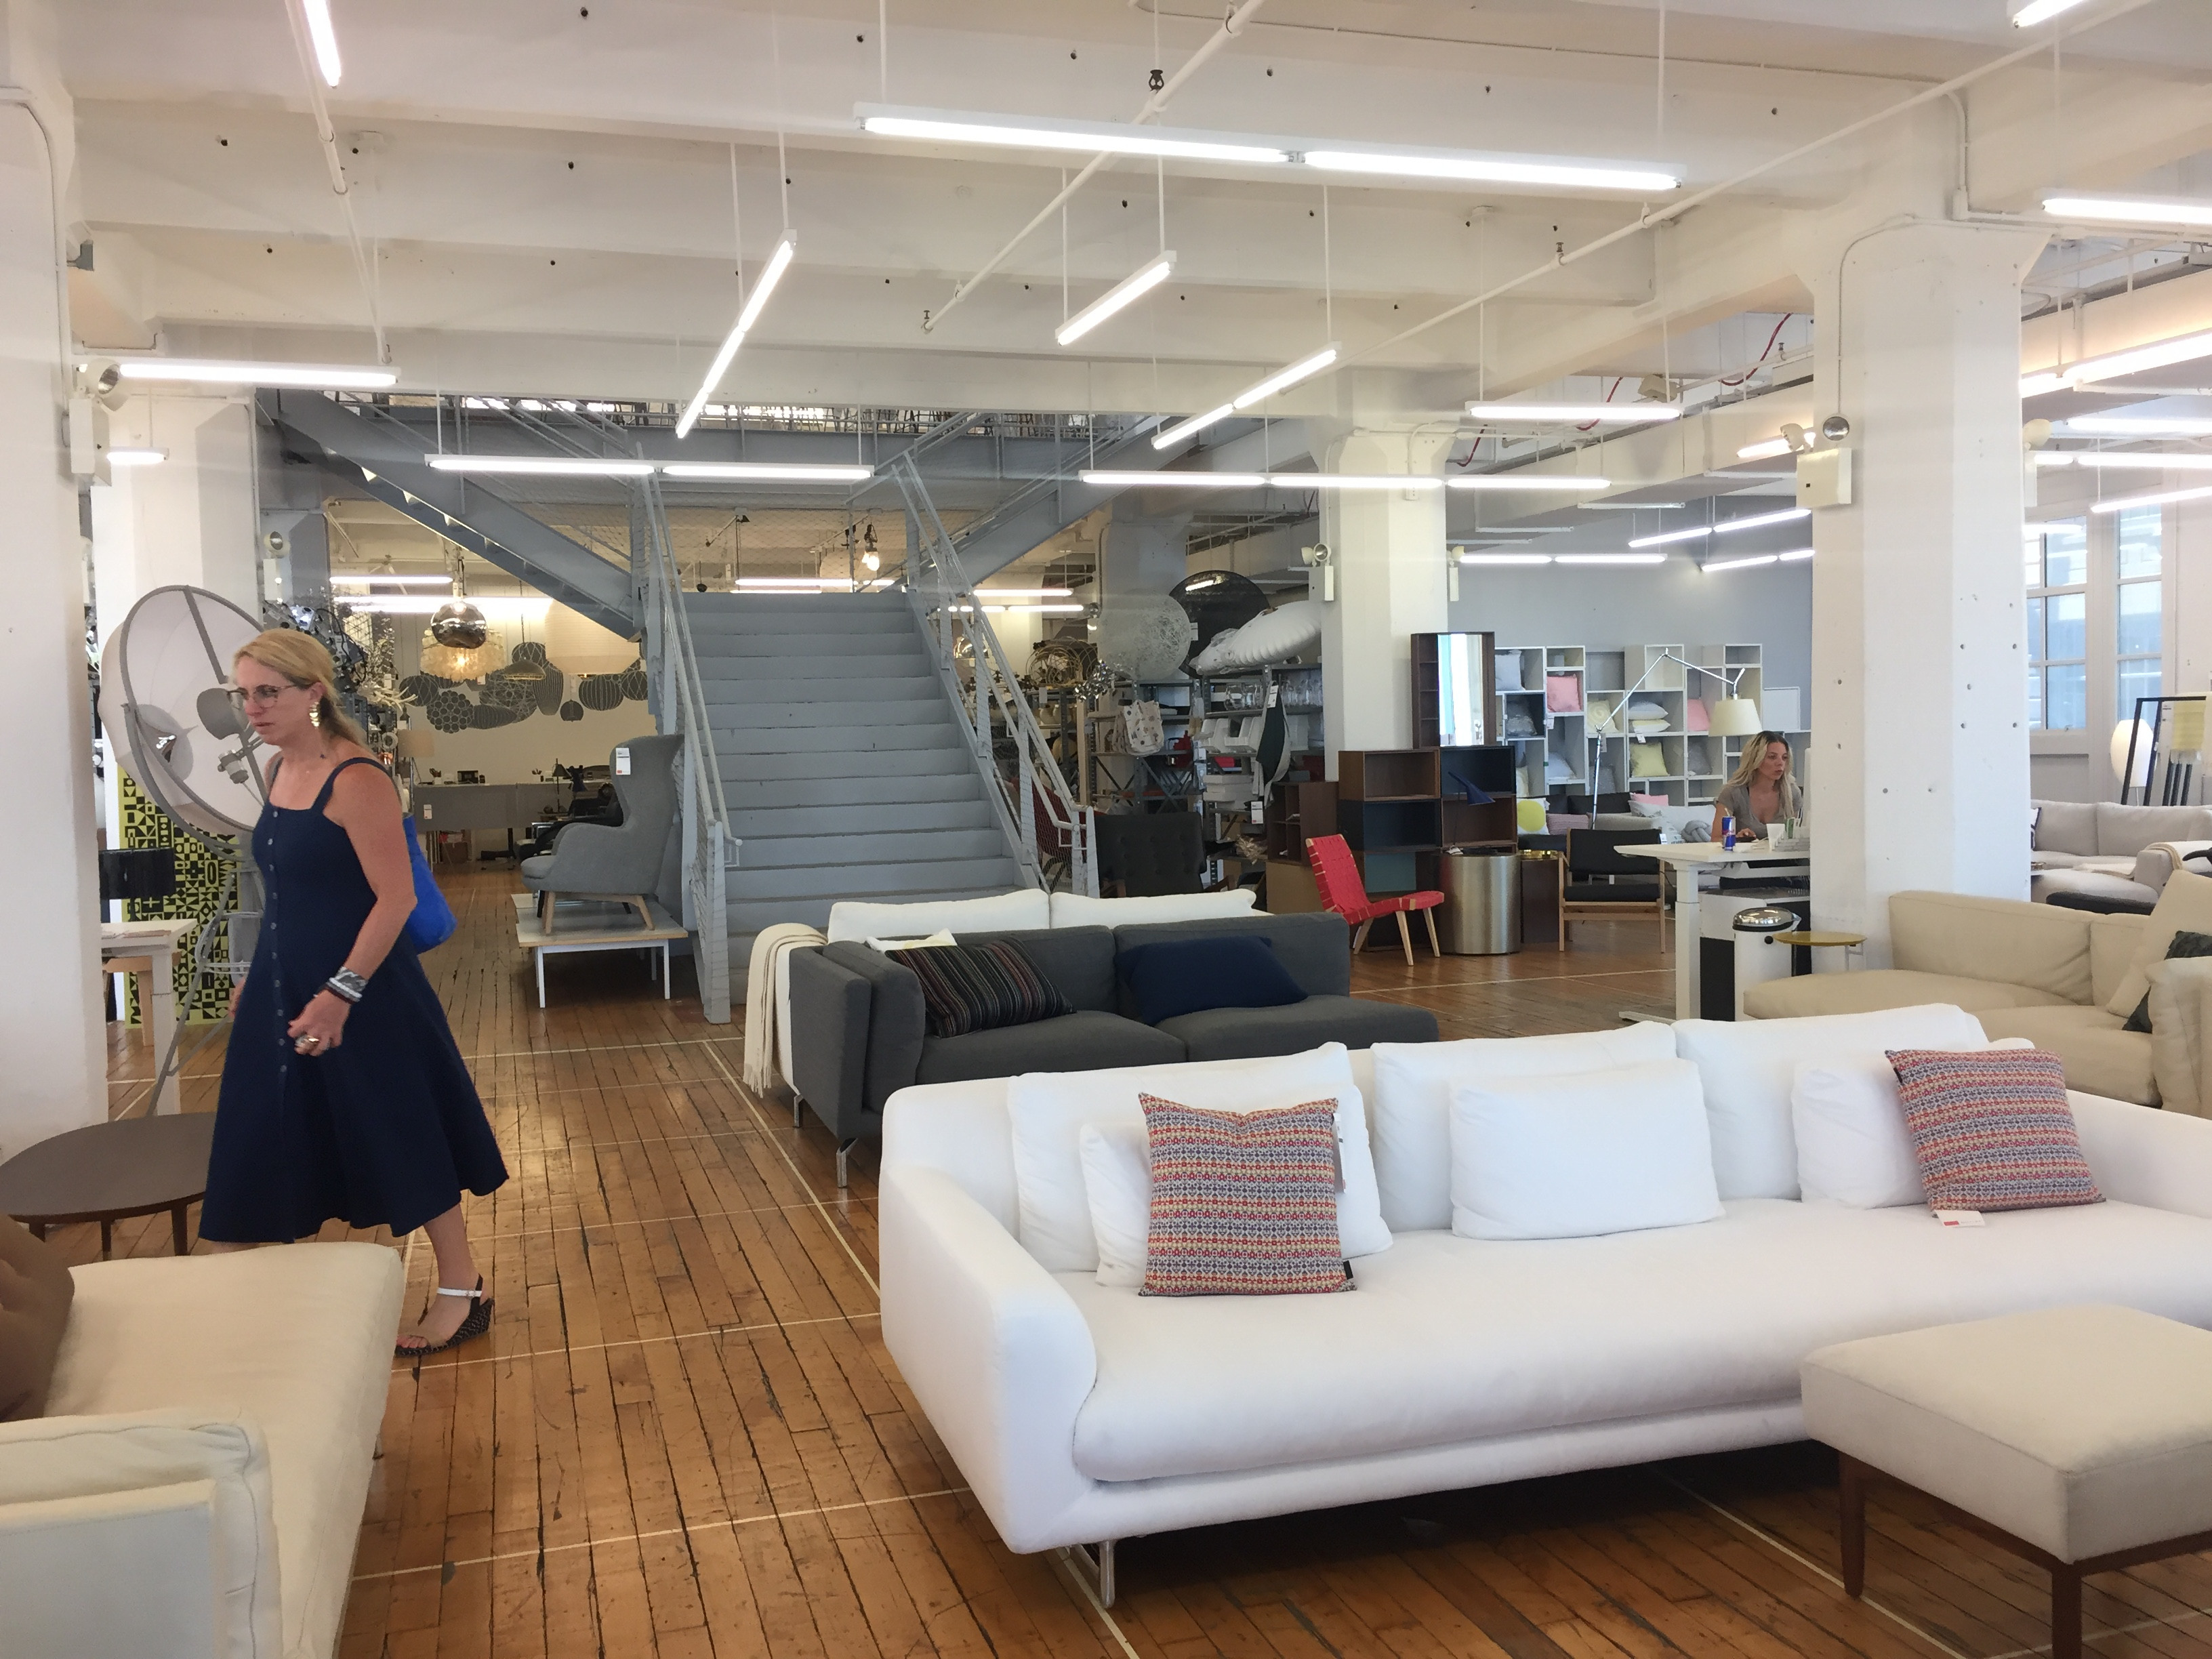 Rooms to Go to open massive furniture complex in North Carolina